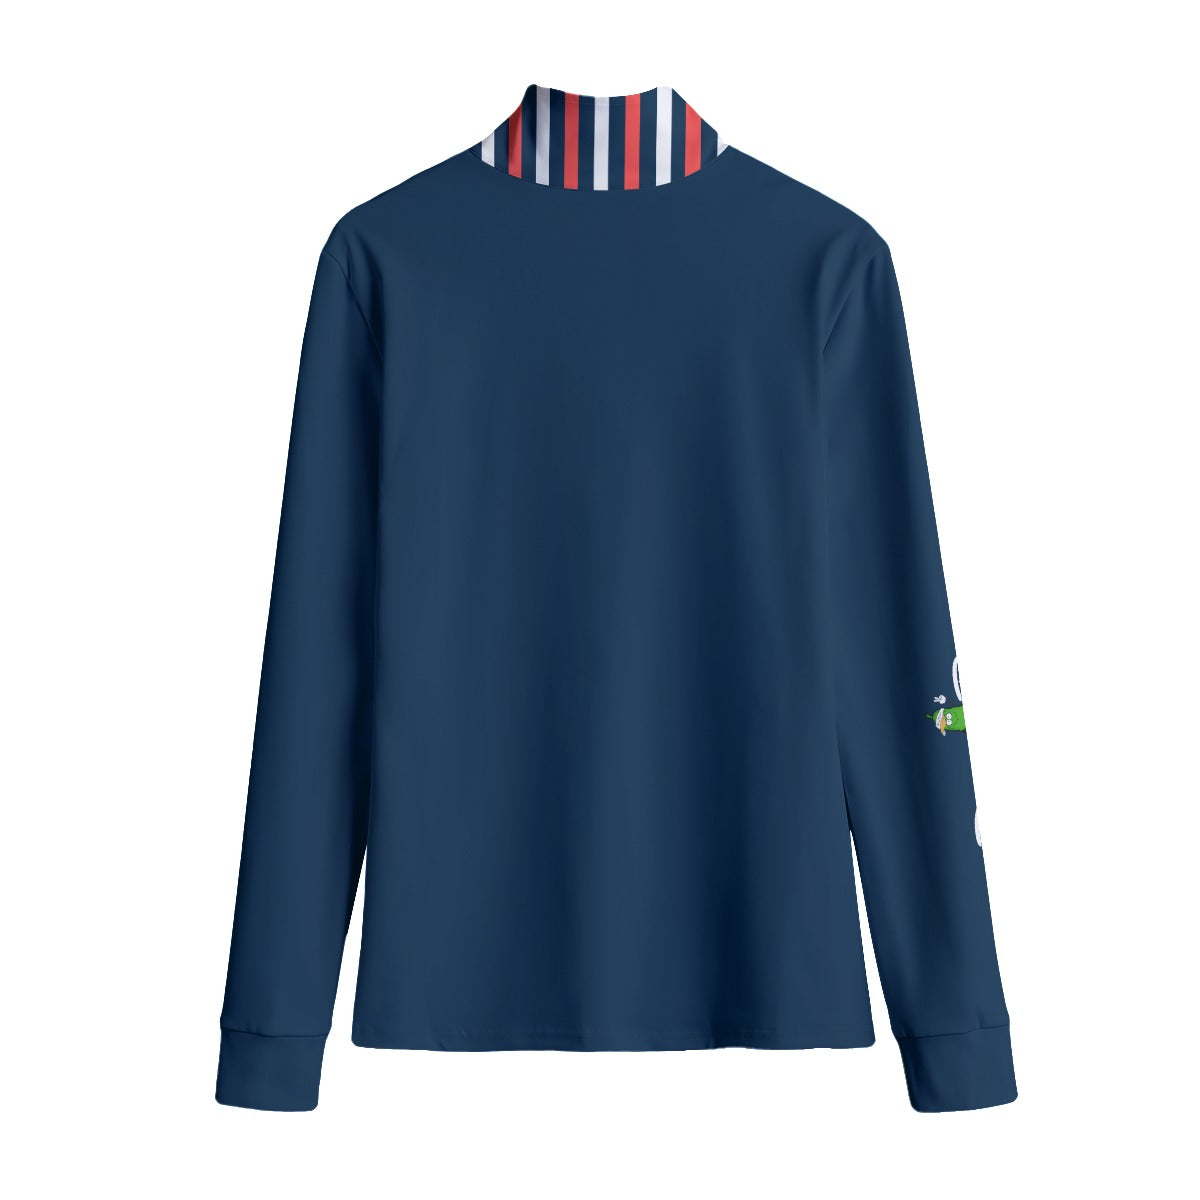 Van - Navy Blue - Stripes - Women's Quarter Zip Long Sleeve Casual Pullover by Dizzy Pickle